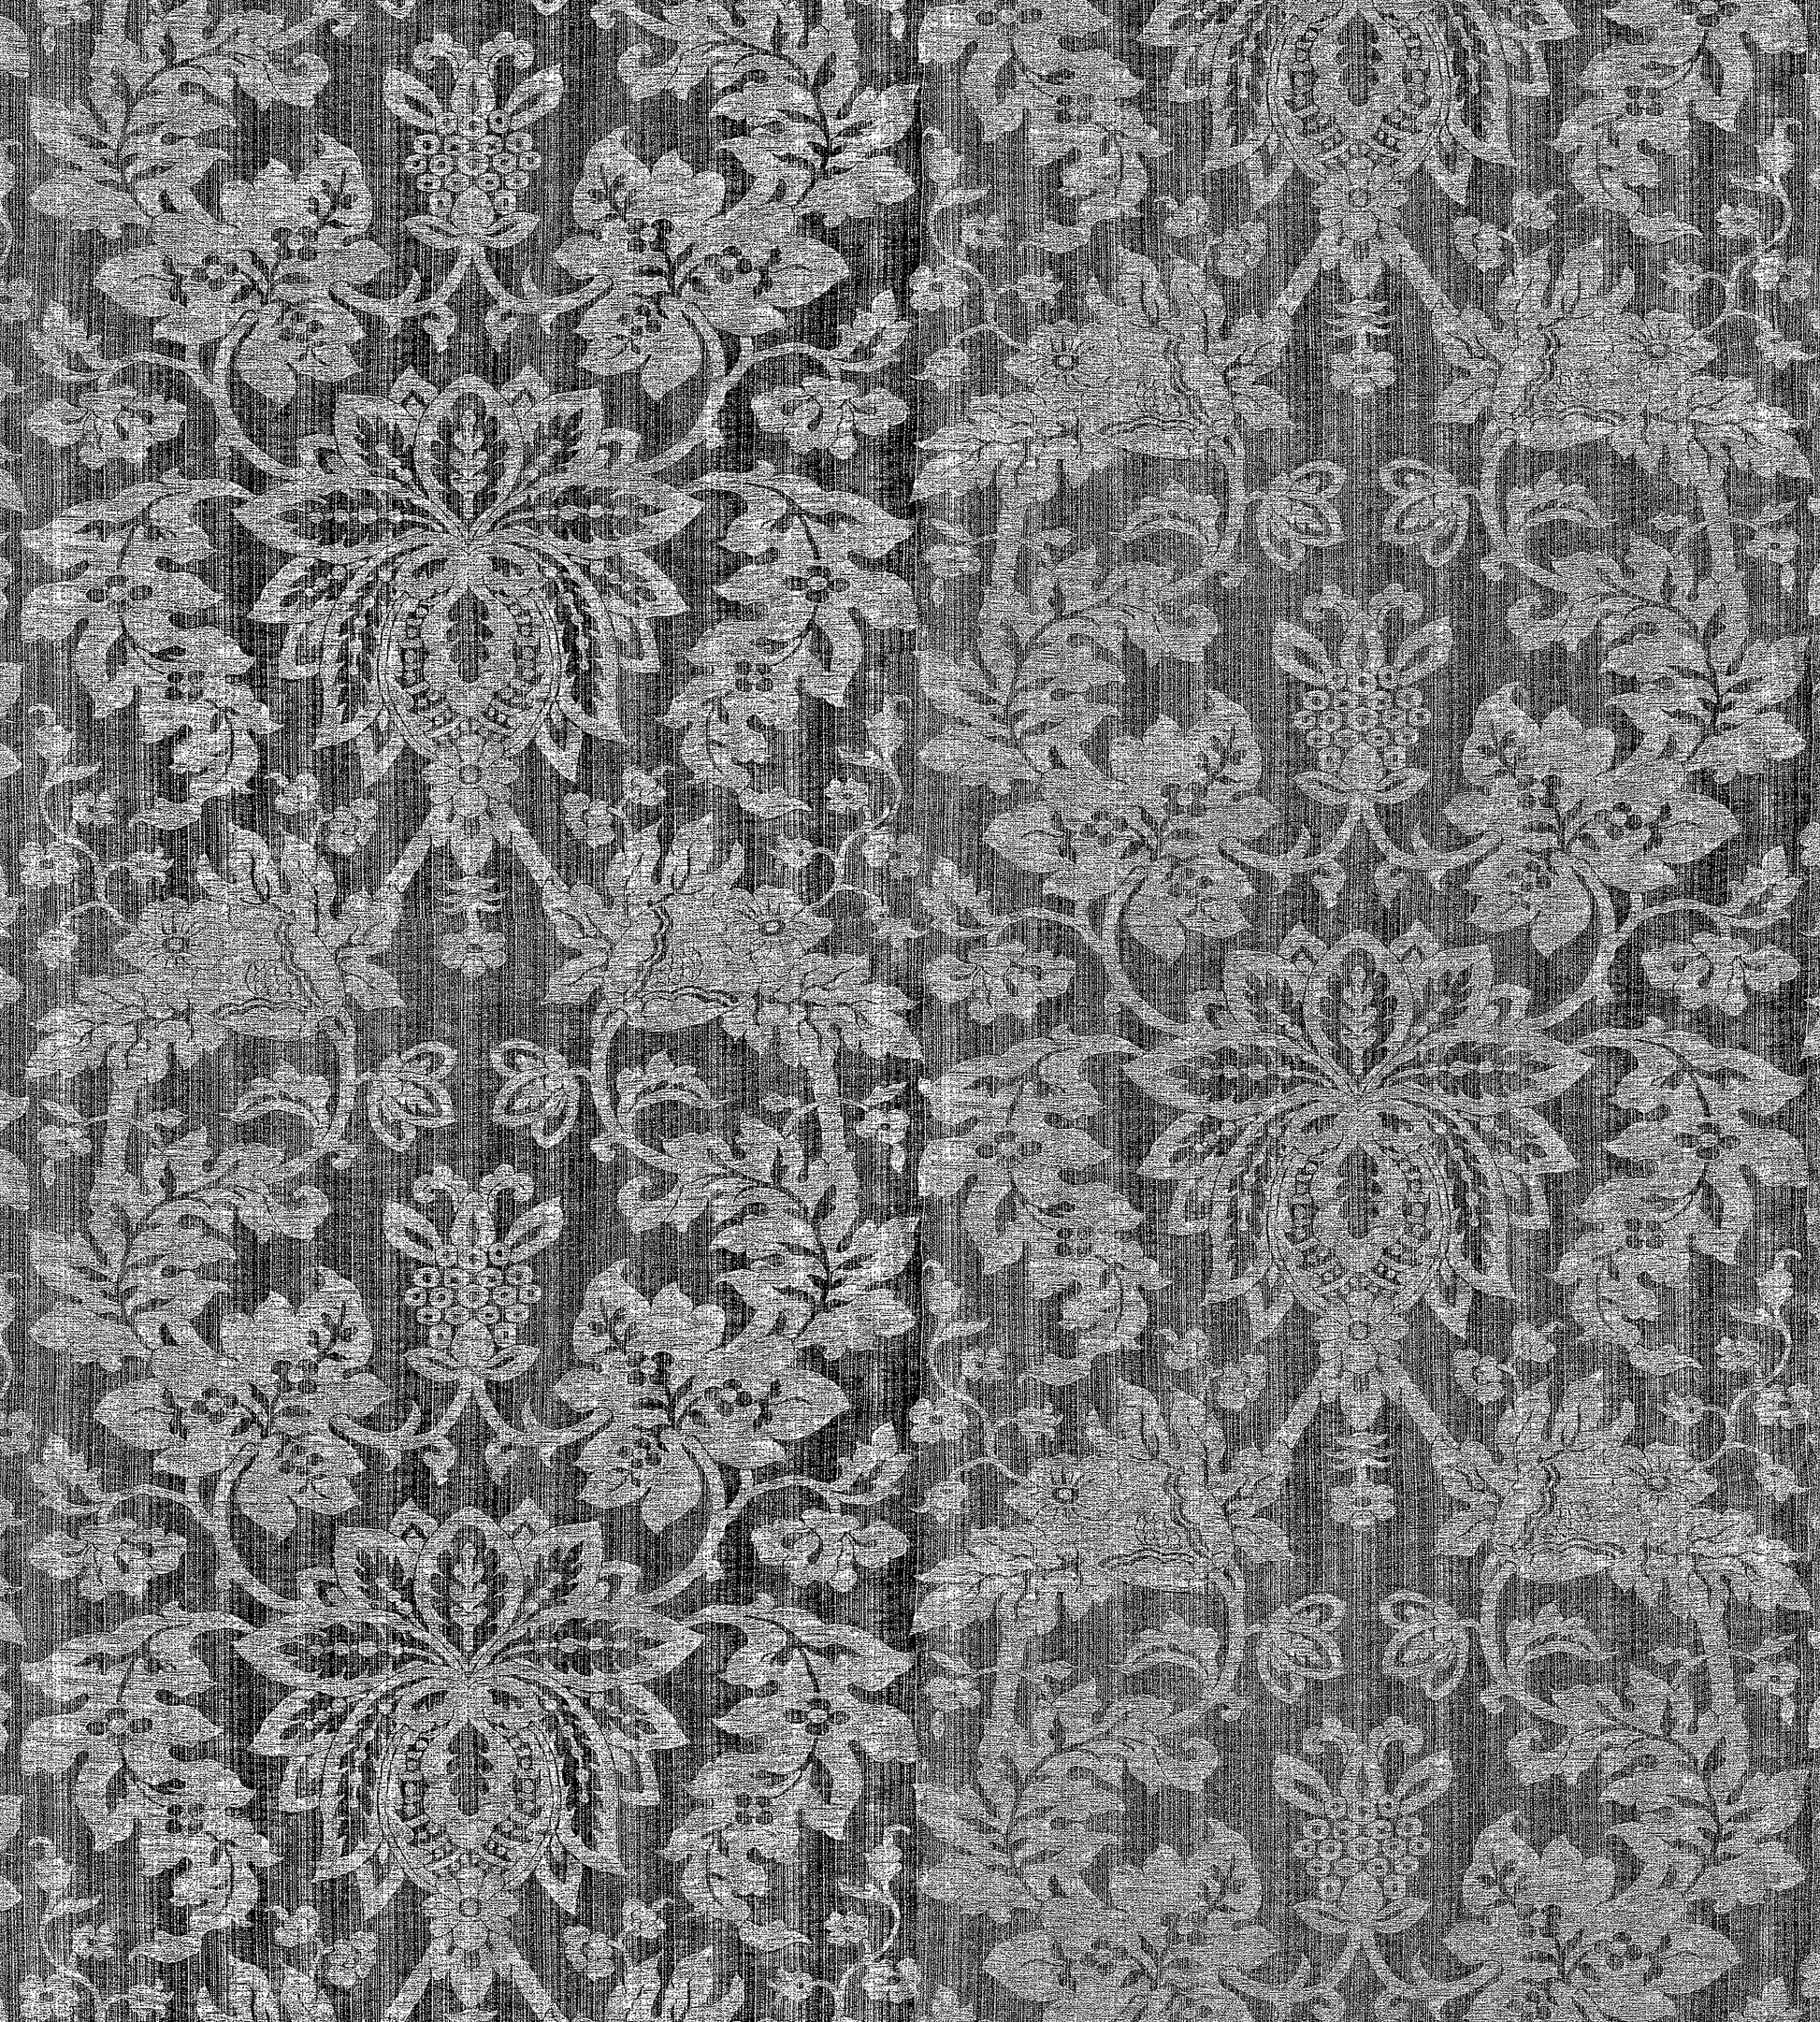 Purchase Scalamandre Fabric Product# SC 000227136, Metalline Damask Flax 2